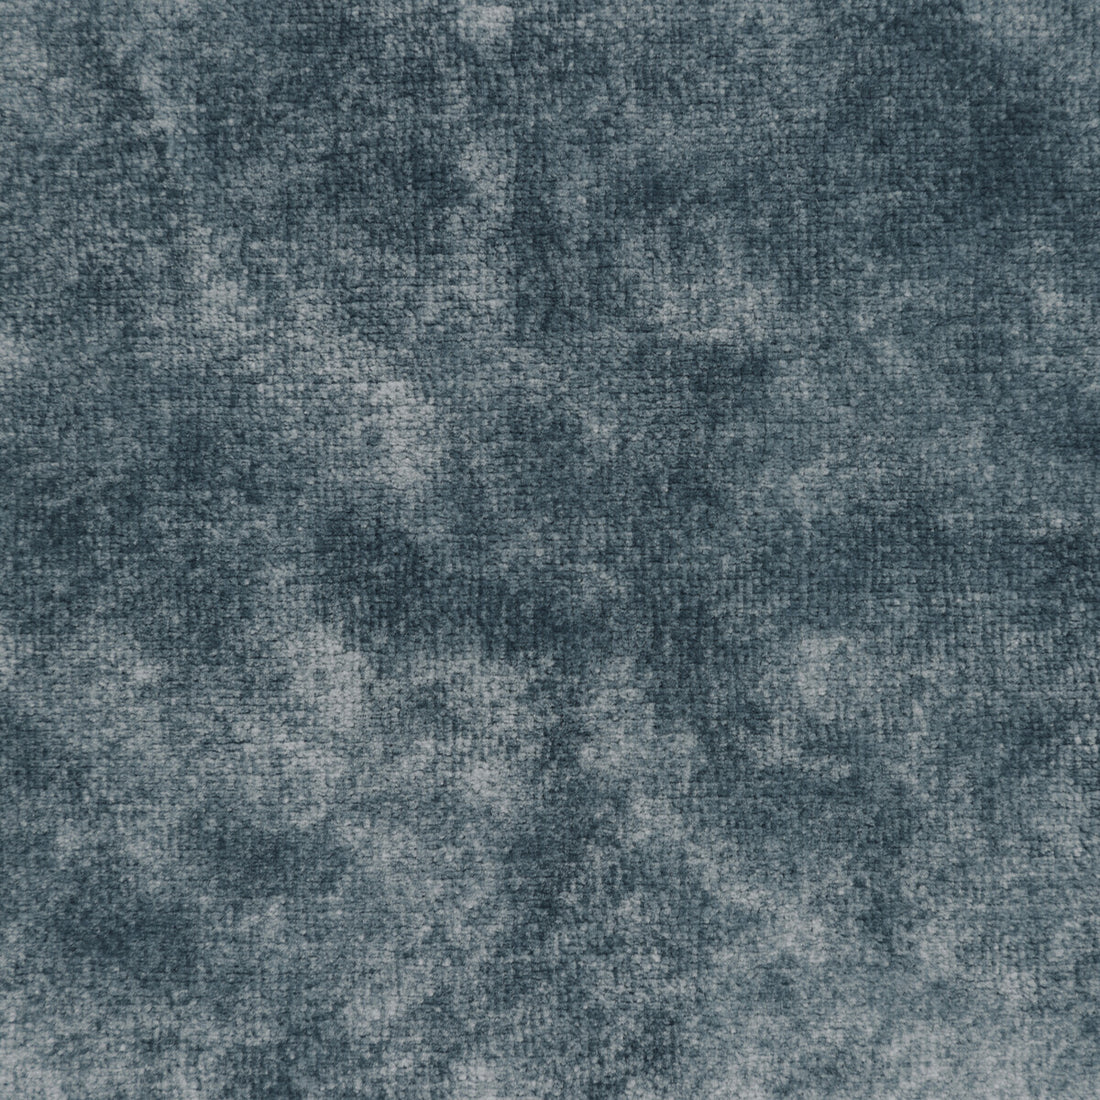 Regal Velvet fabric in steel blue color - pattern 36064.5.0 - by Kravet Couture